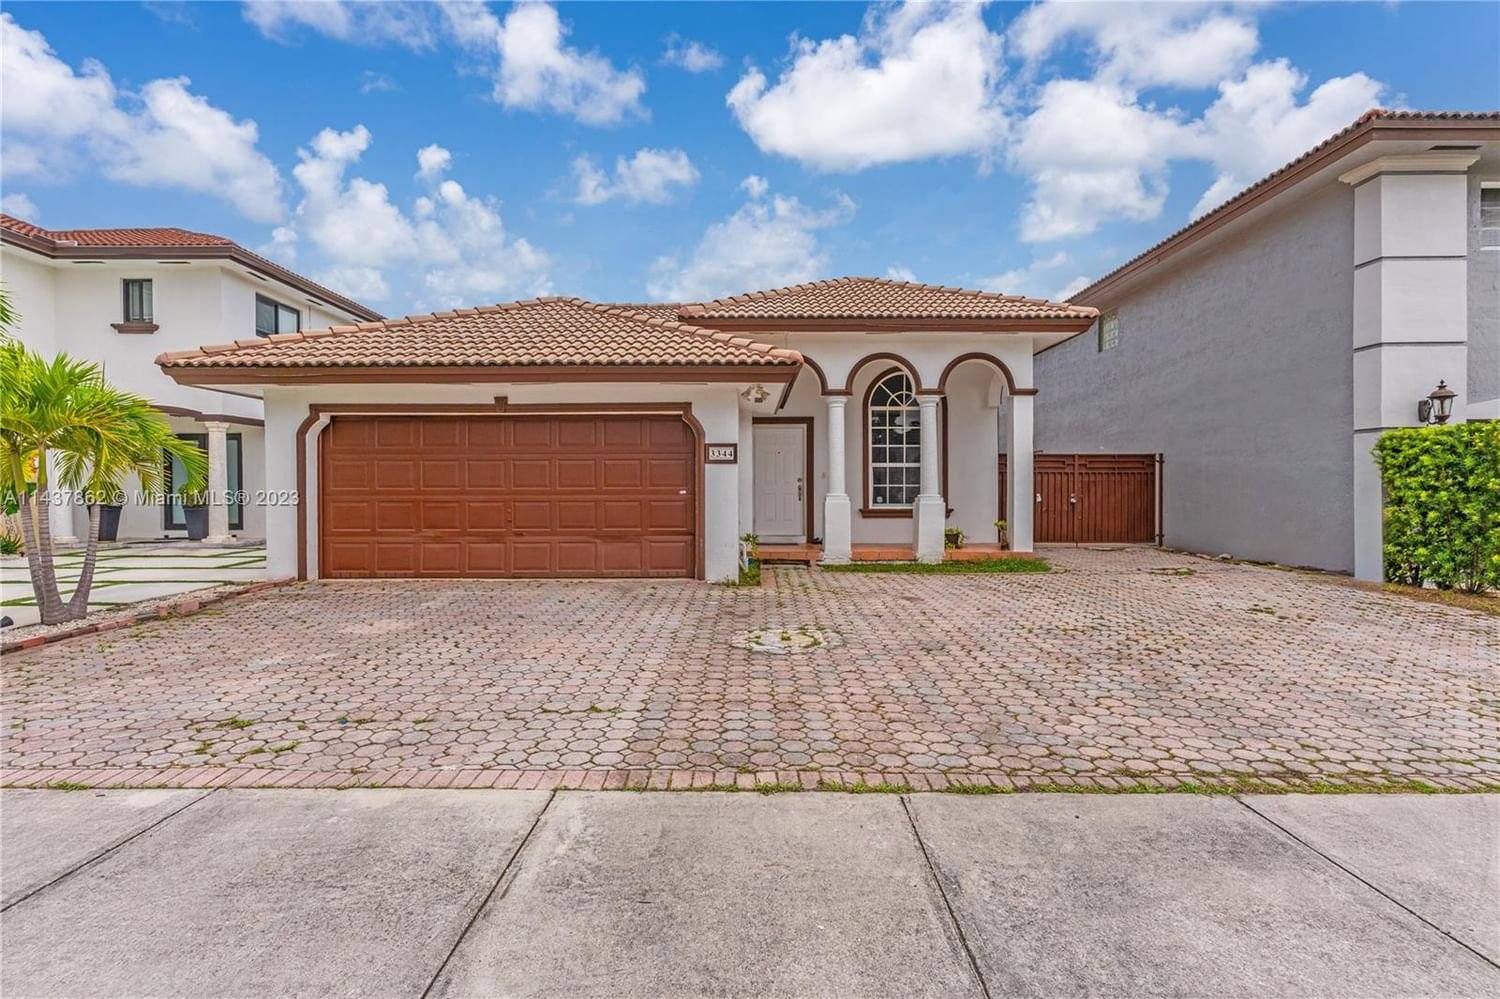 Real estate property located at 3344 154th Ct, Miami-Dade County, Miami, FL